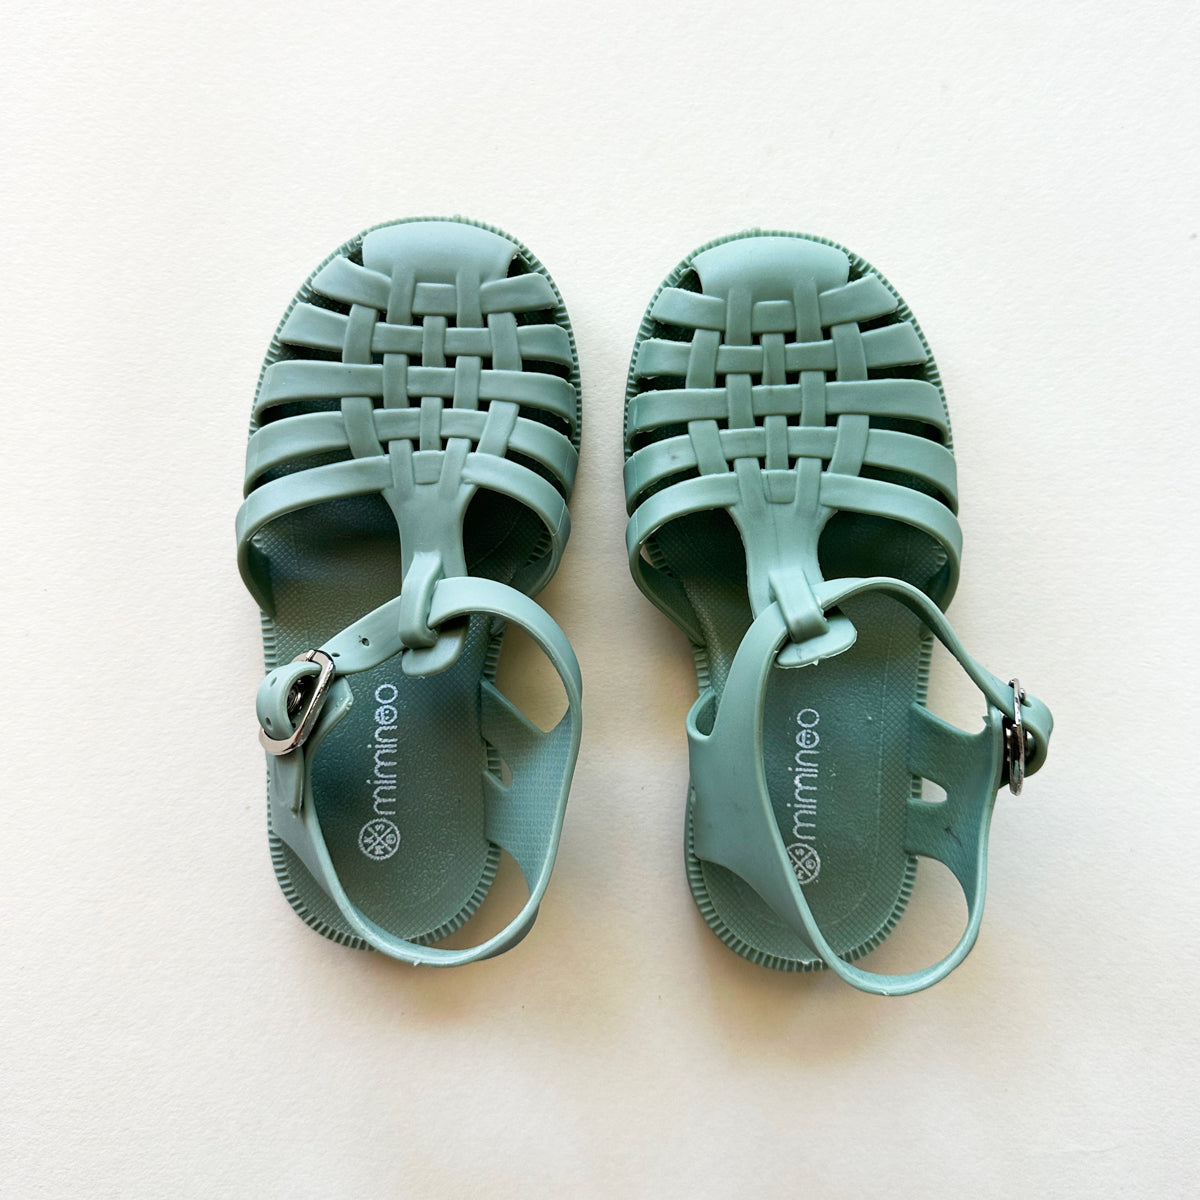 A pair of MKS Miminoo Flexible PVC Summer waterproof Sandals in Sage